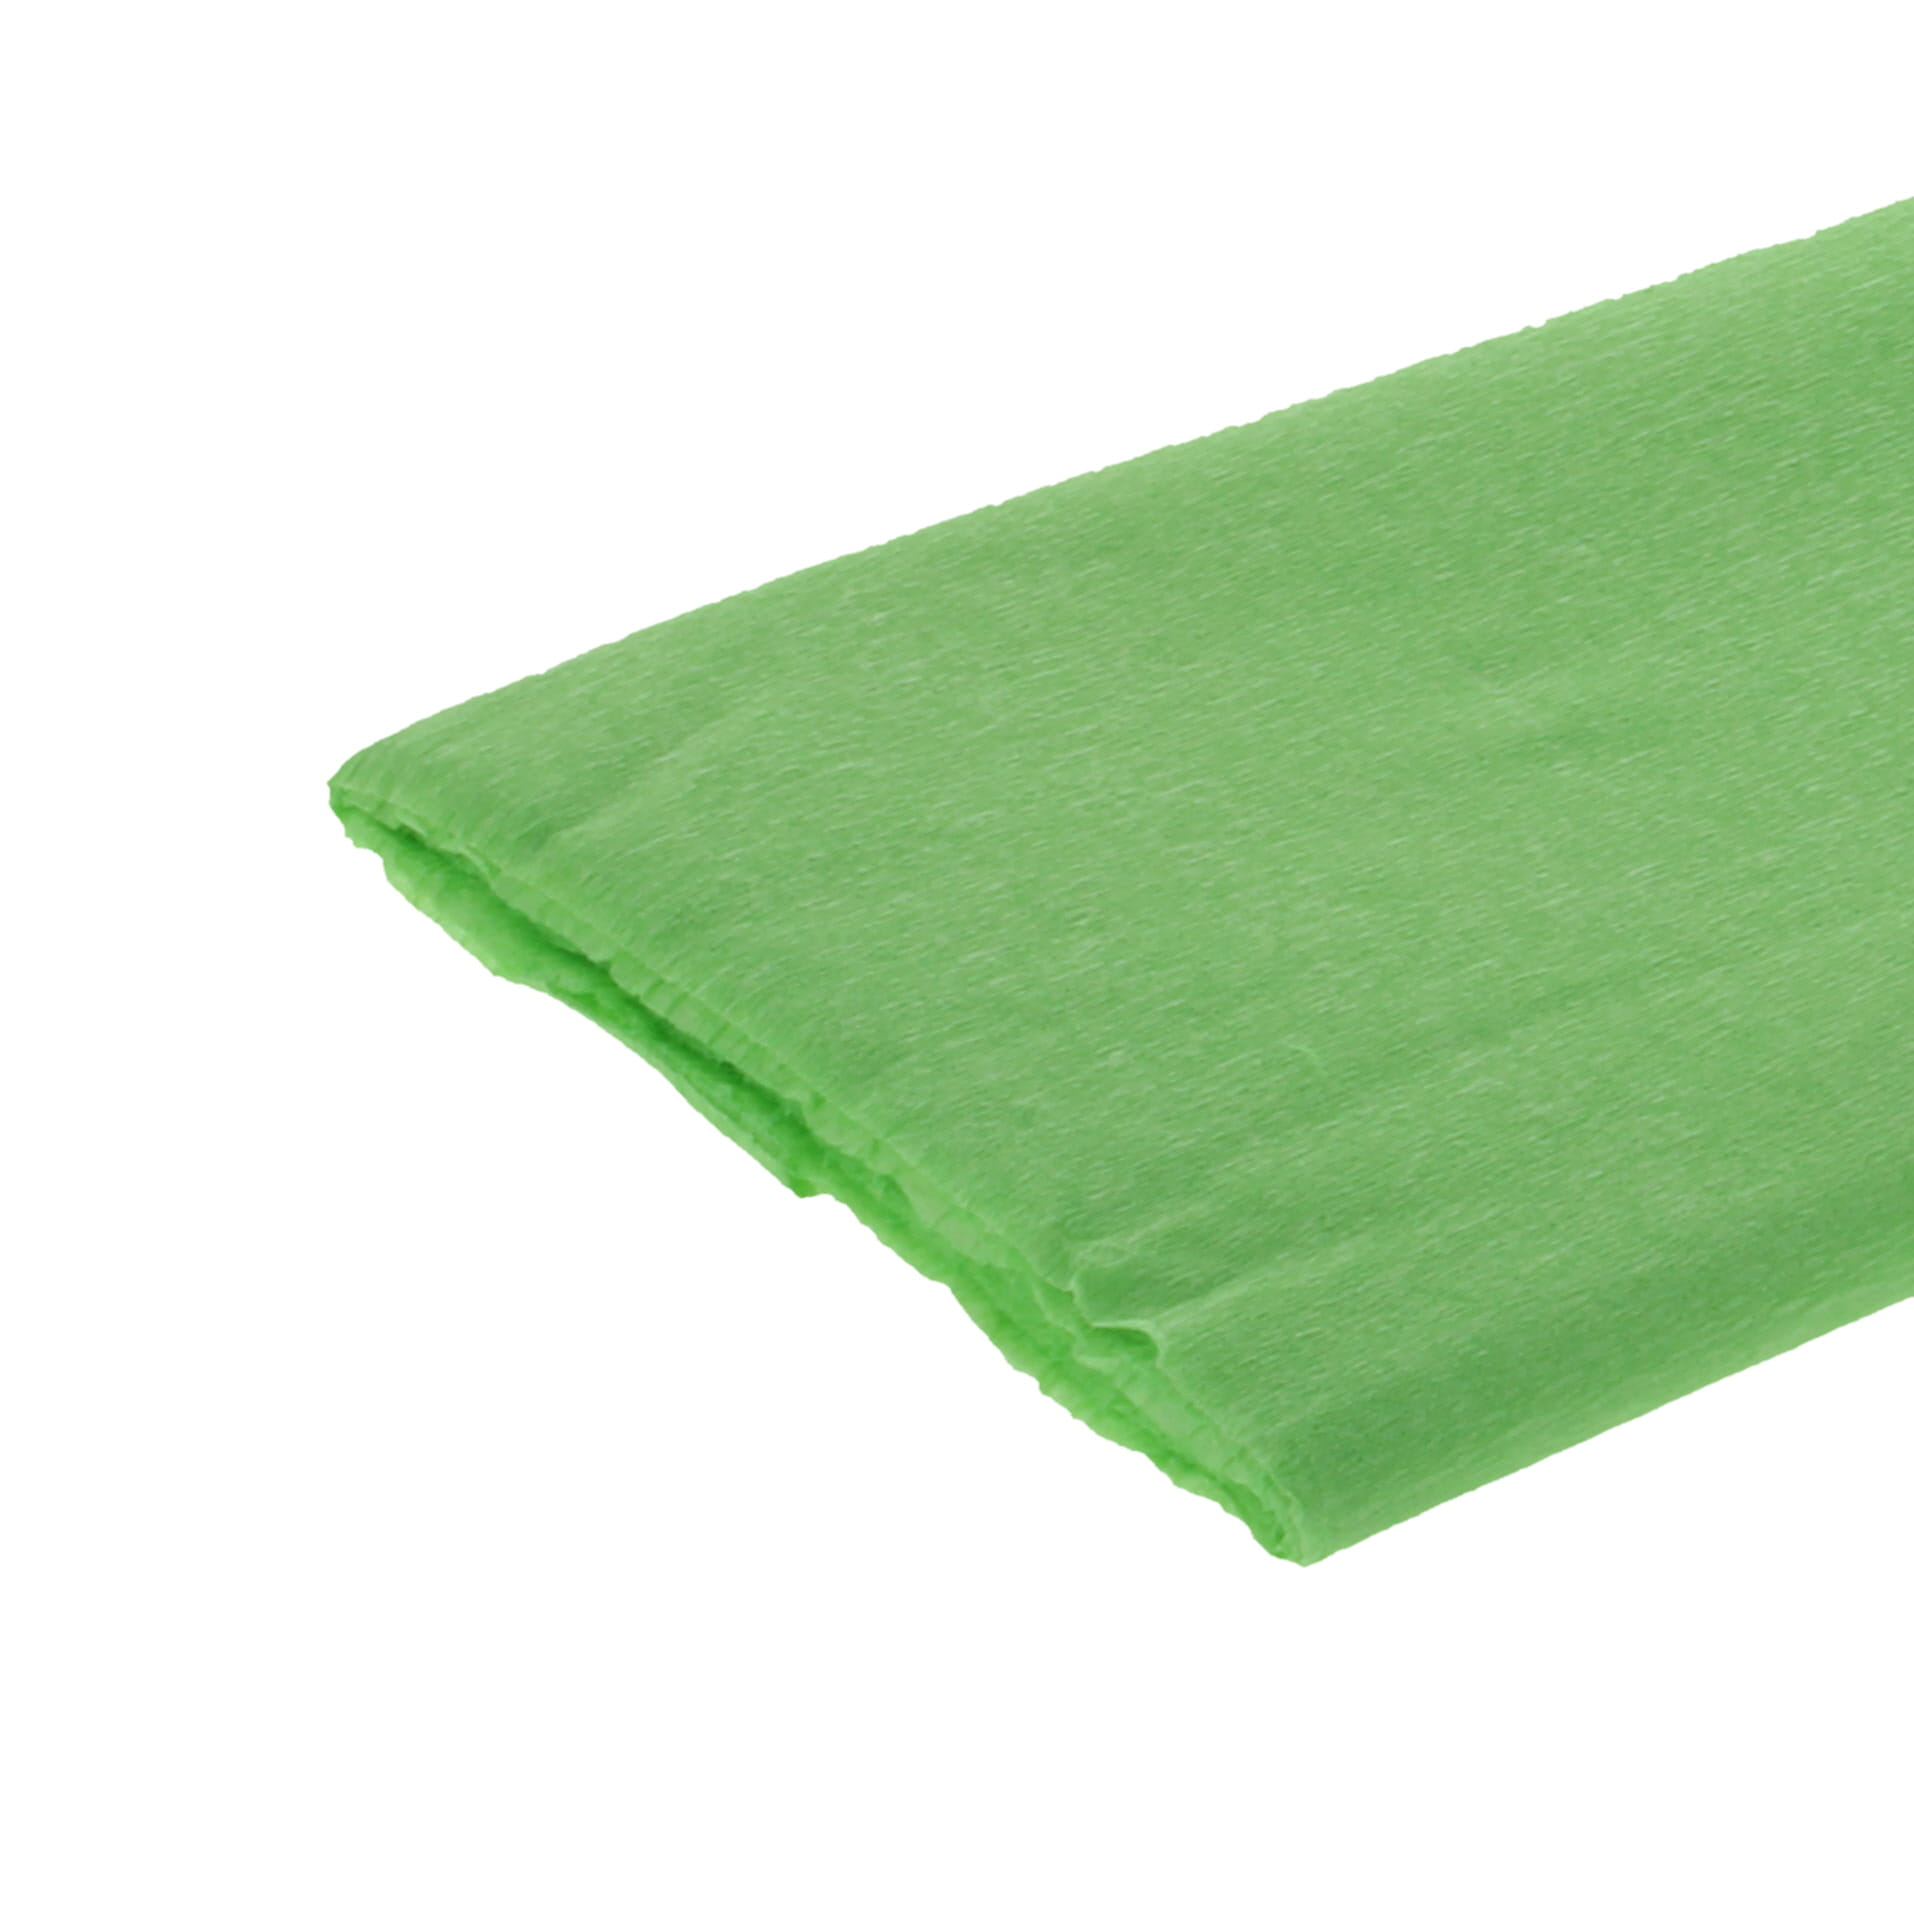 Crepe Paper Light Green - 51cm x 3m - pack of 10